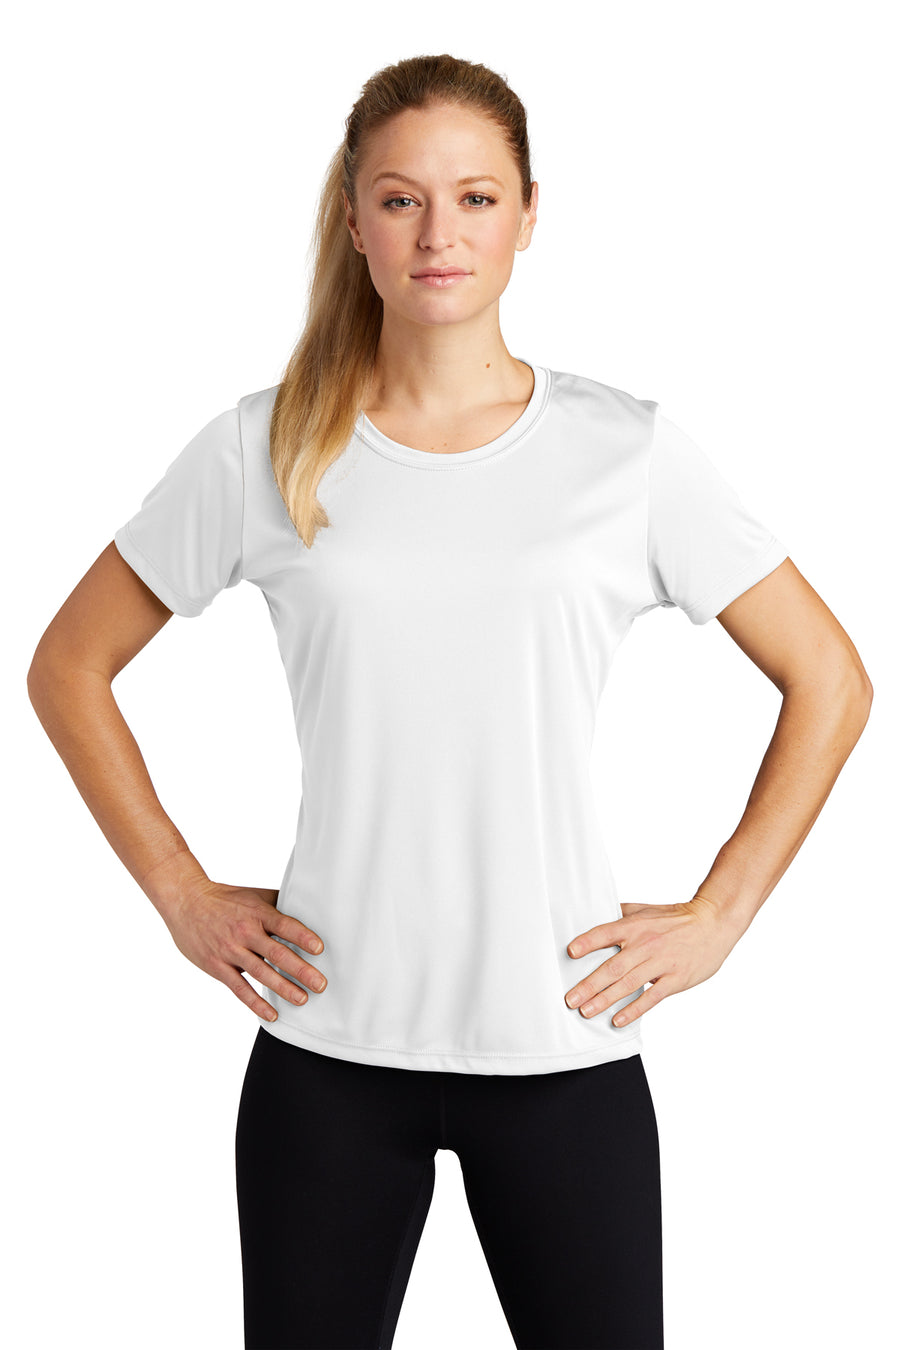 Women's 100% Polyester Moisture-Wicking T-Shirt (Short Sleeve)